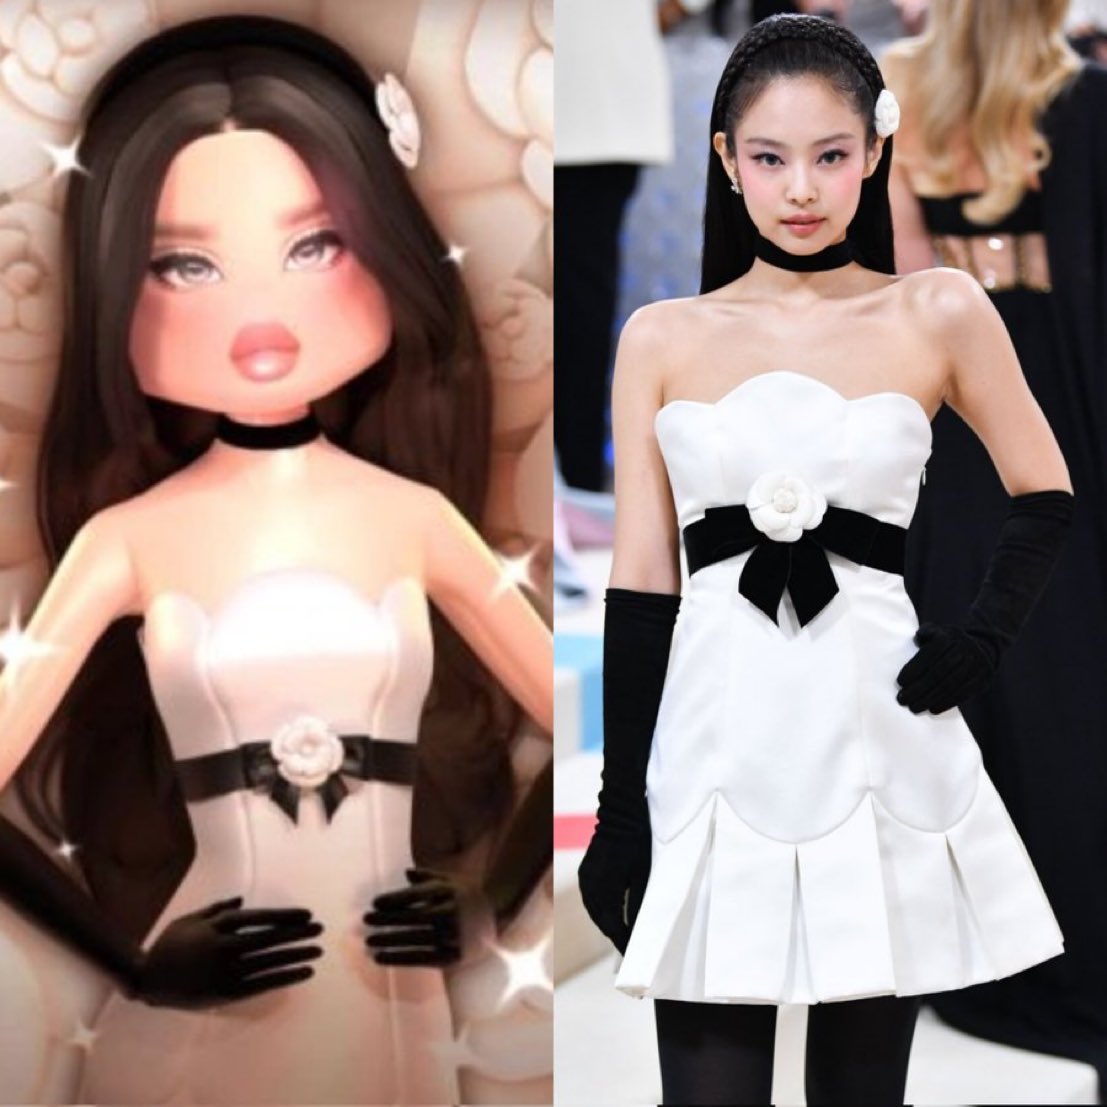 “Dress To Impress” game on Roblox takes Inspiration from #JENNE's Met Gala look.

#블랙핑크 #제니 @BLACKPINK